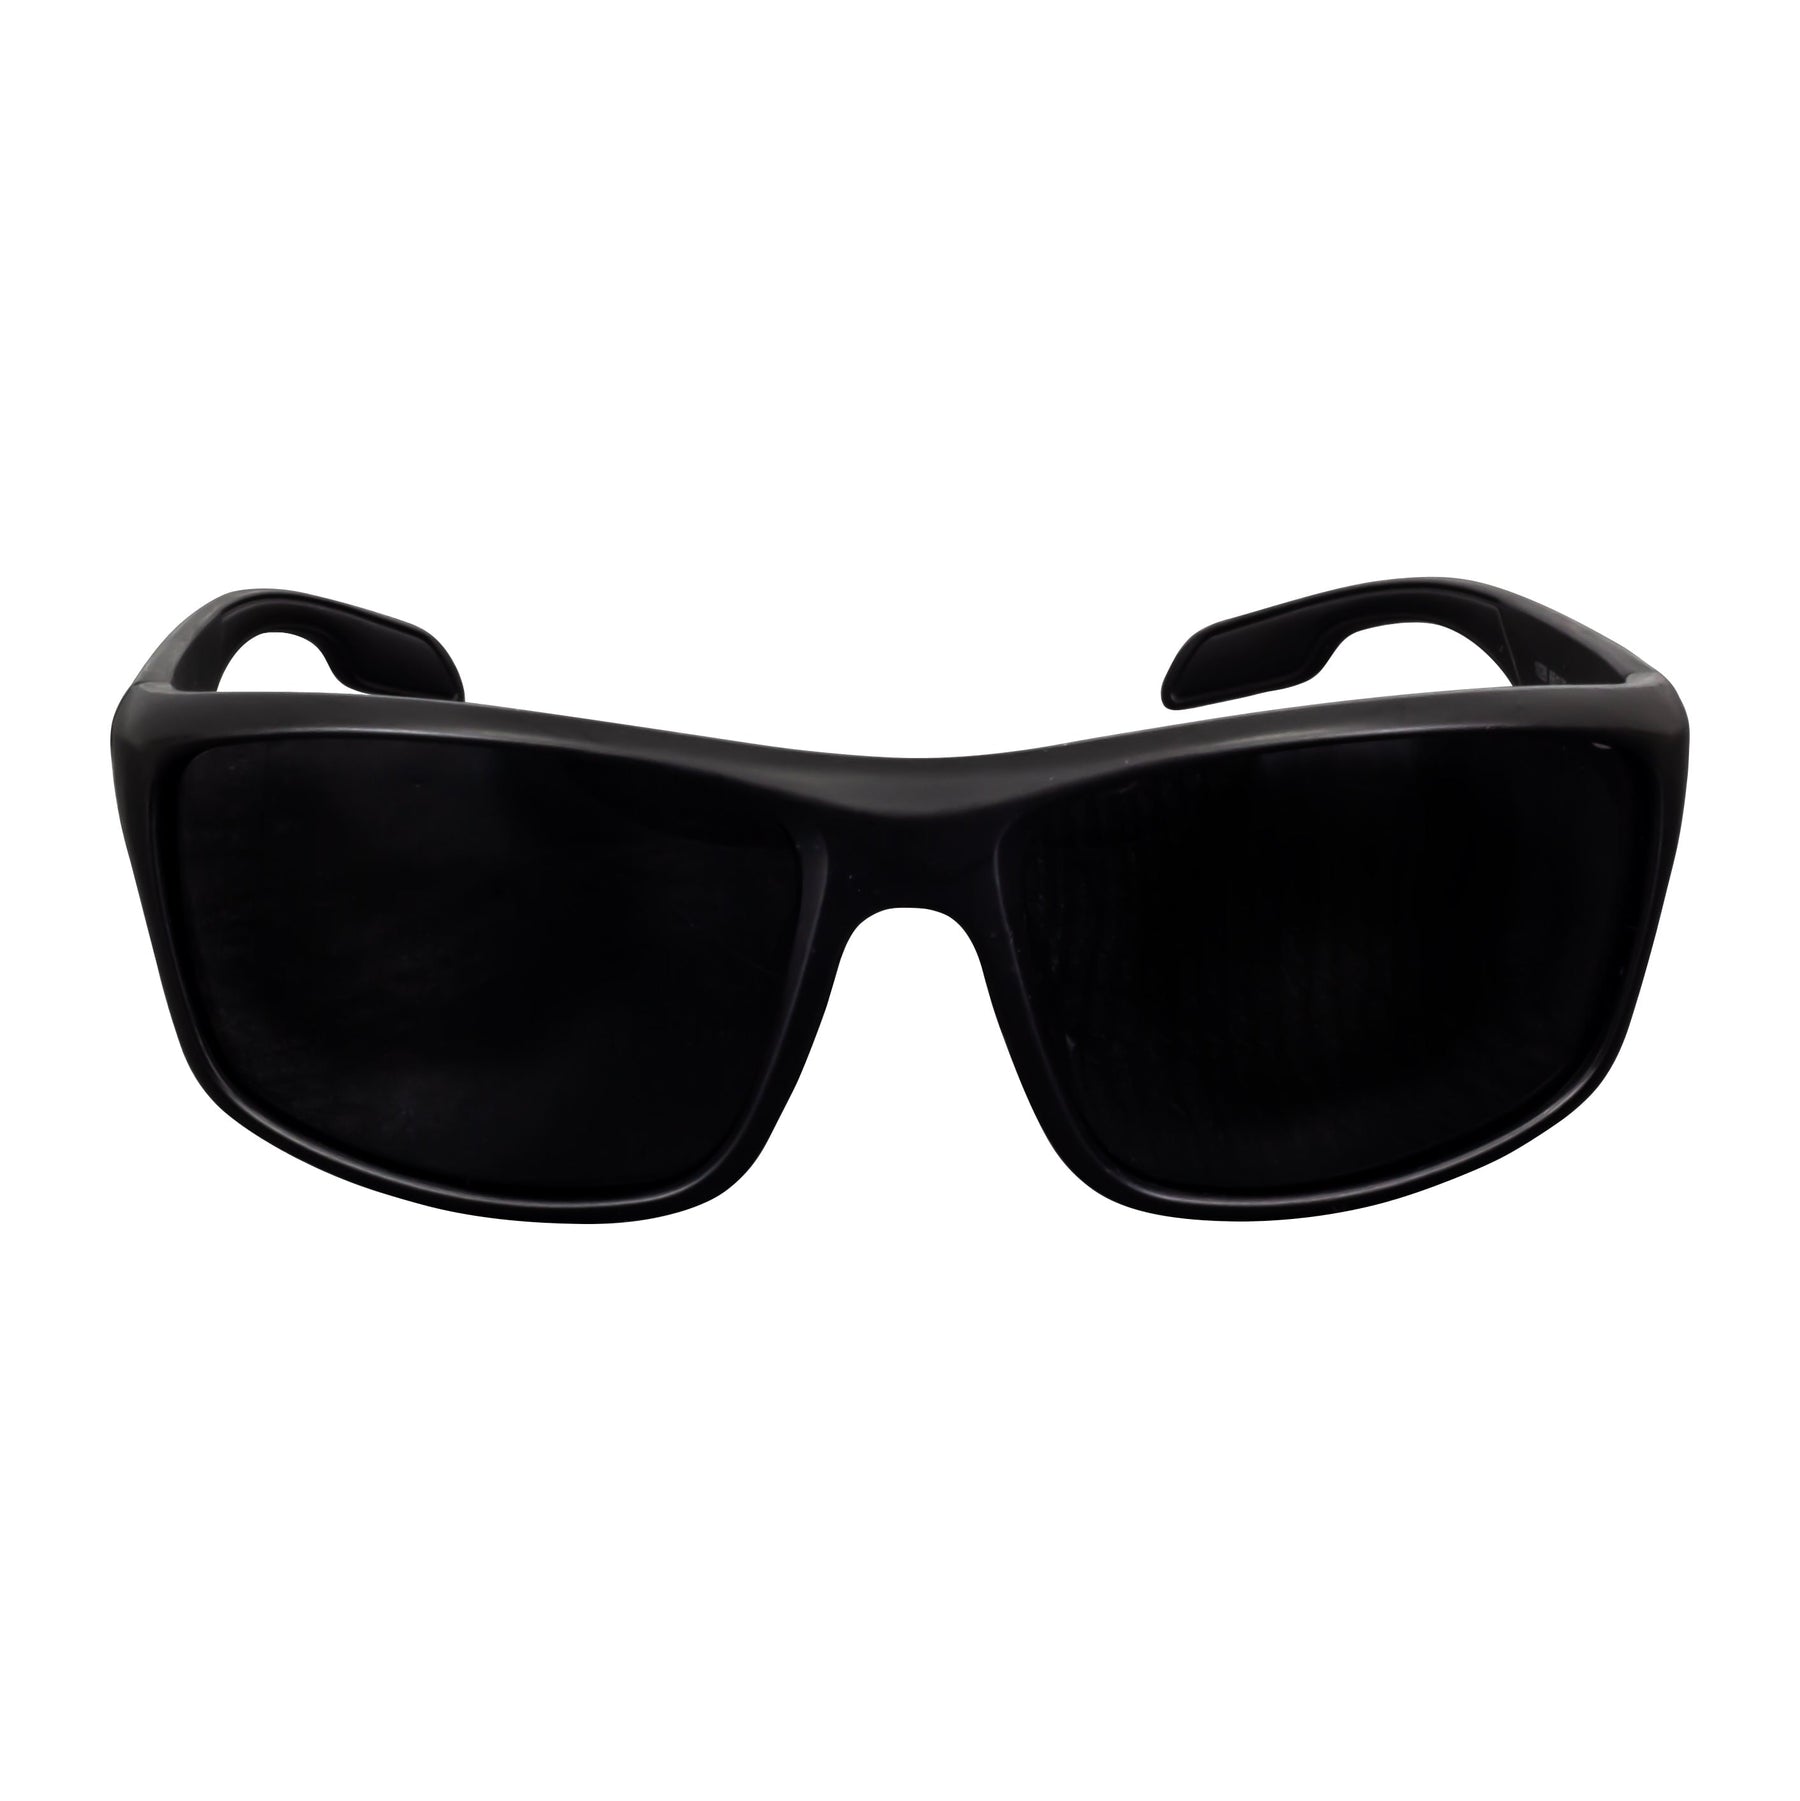 Eagle Lights | Eagle Lights Wrap Around Polarized Sunglasses with UV 400 Protection